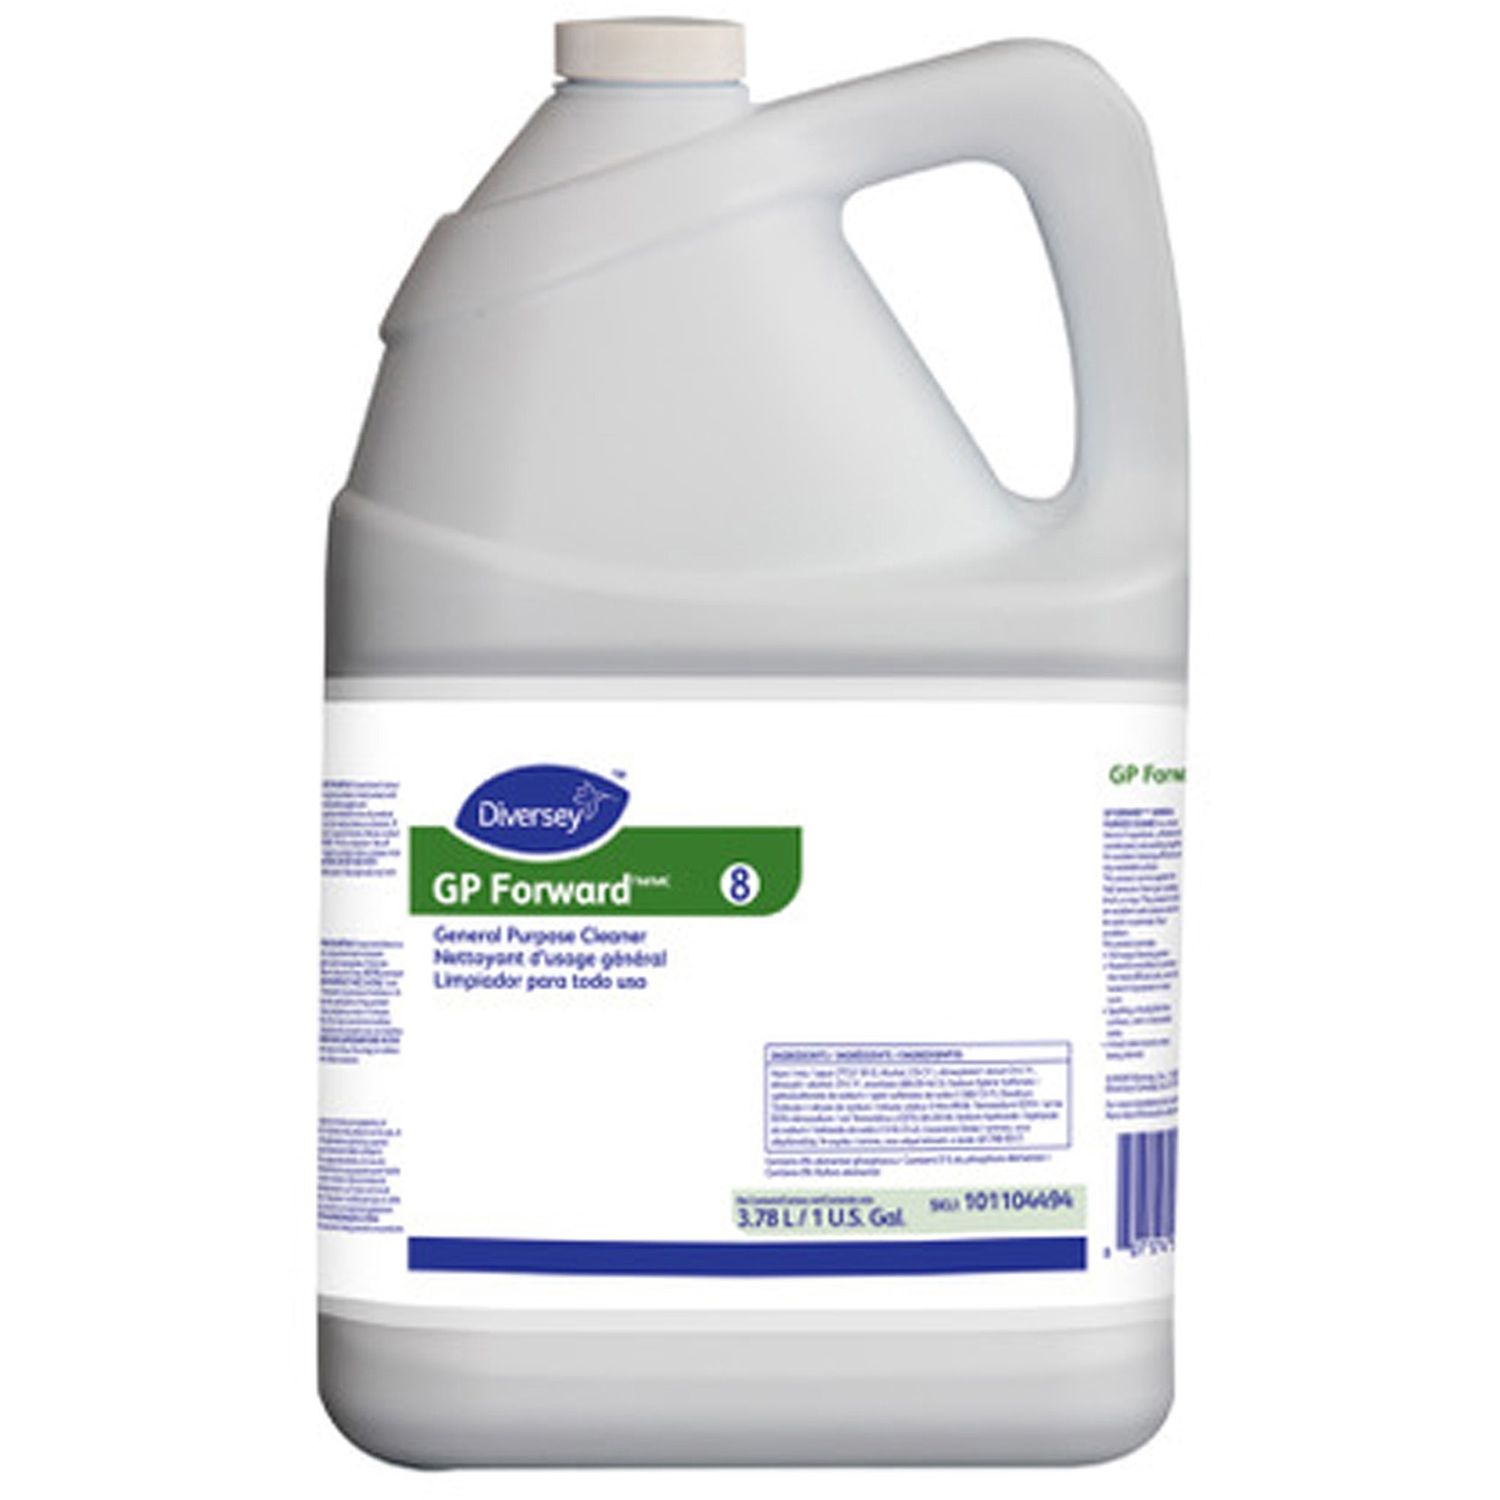 GP Forward General Purpose Cleaner Concentrate Liquid, 128 fl oz (4 quart), Citrus Scent, 4 / Carton, Clear Green